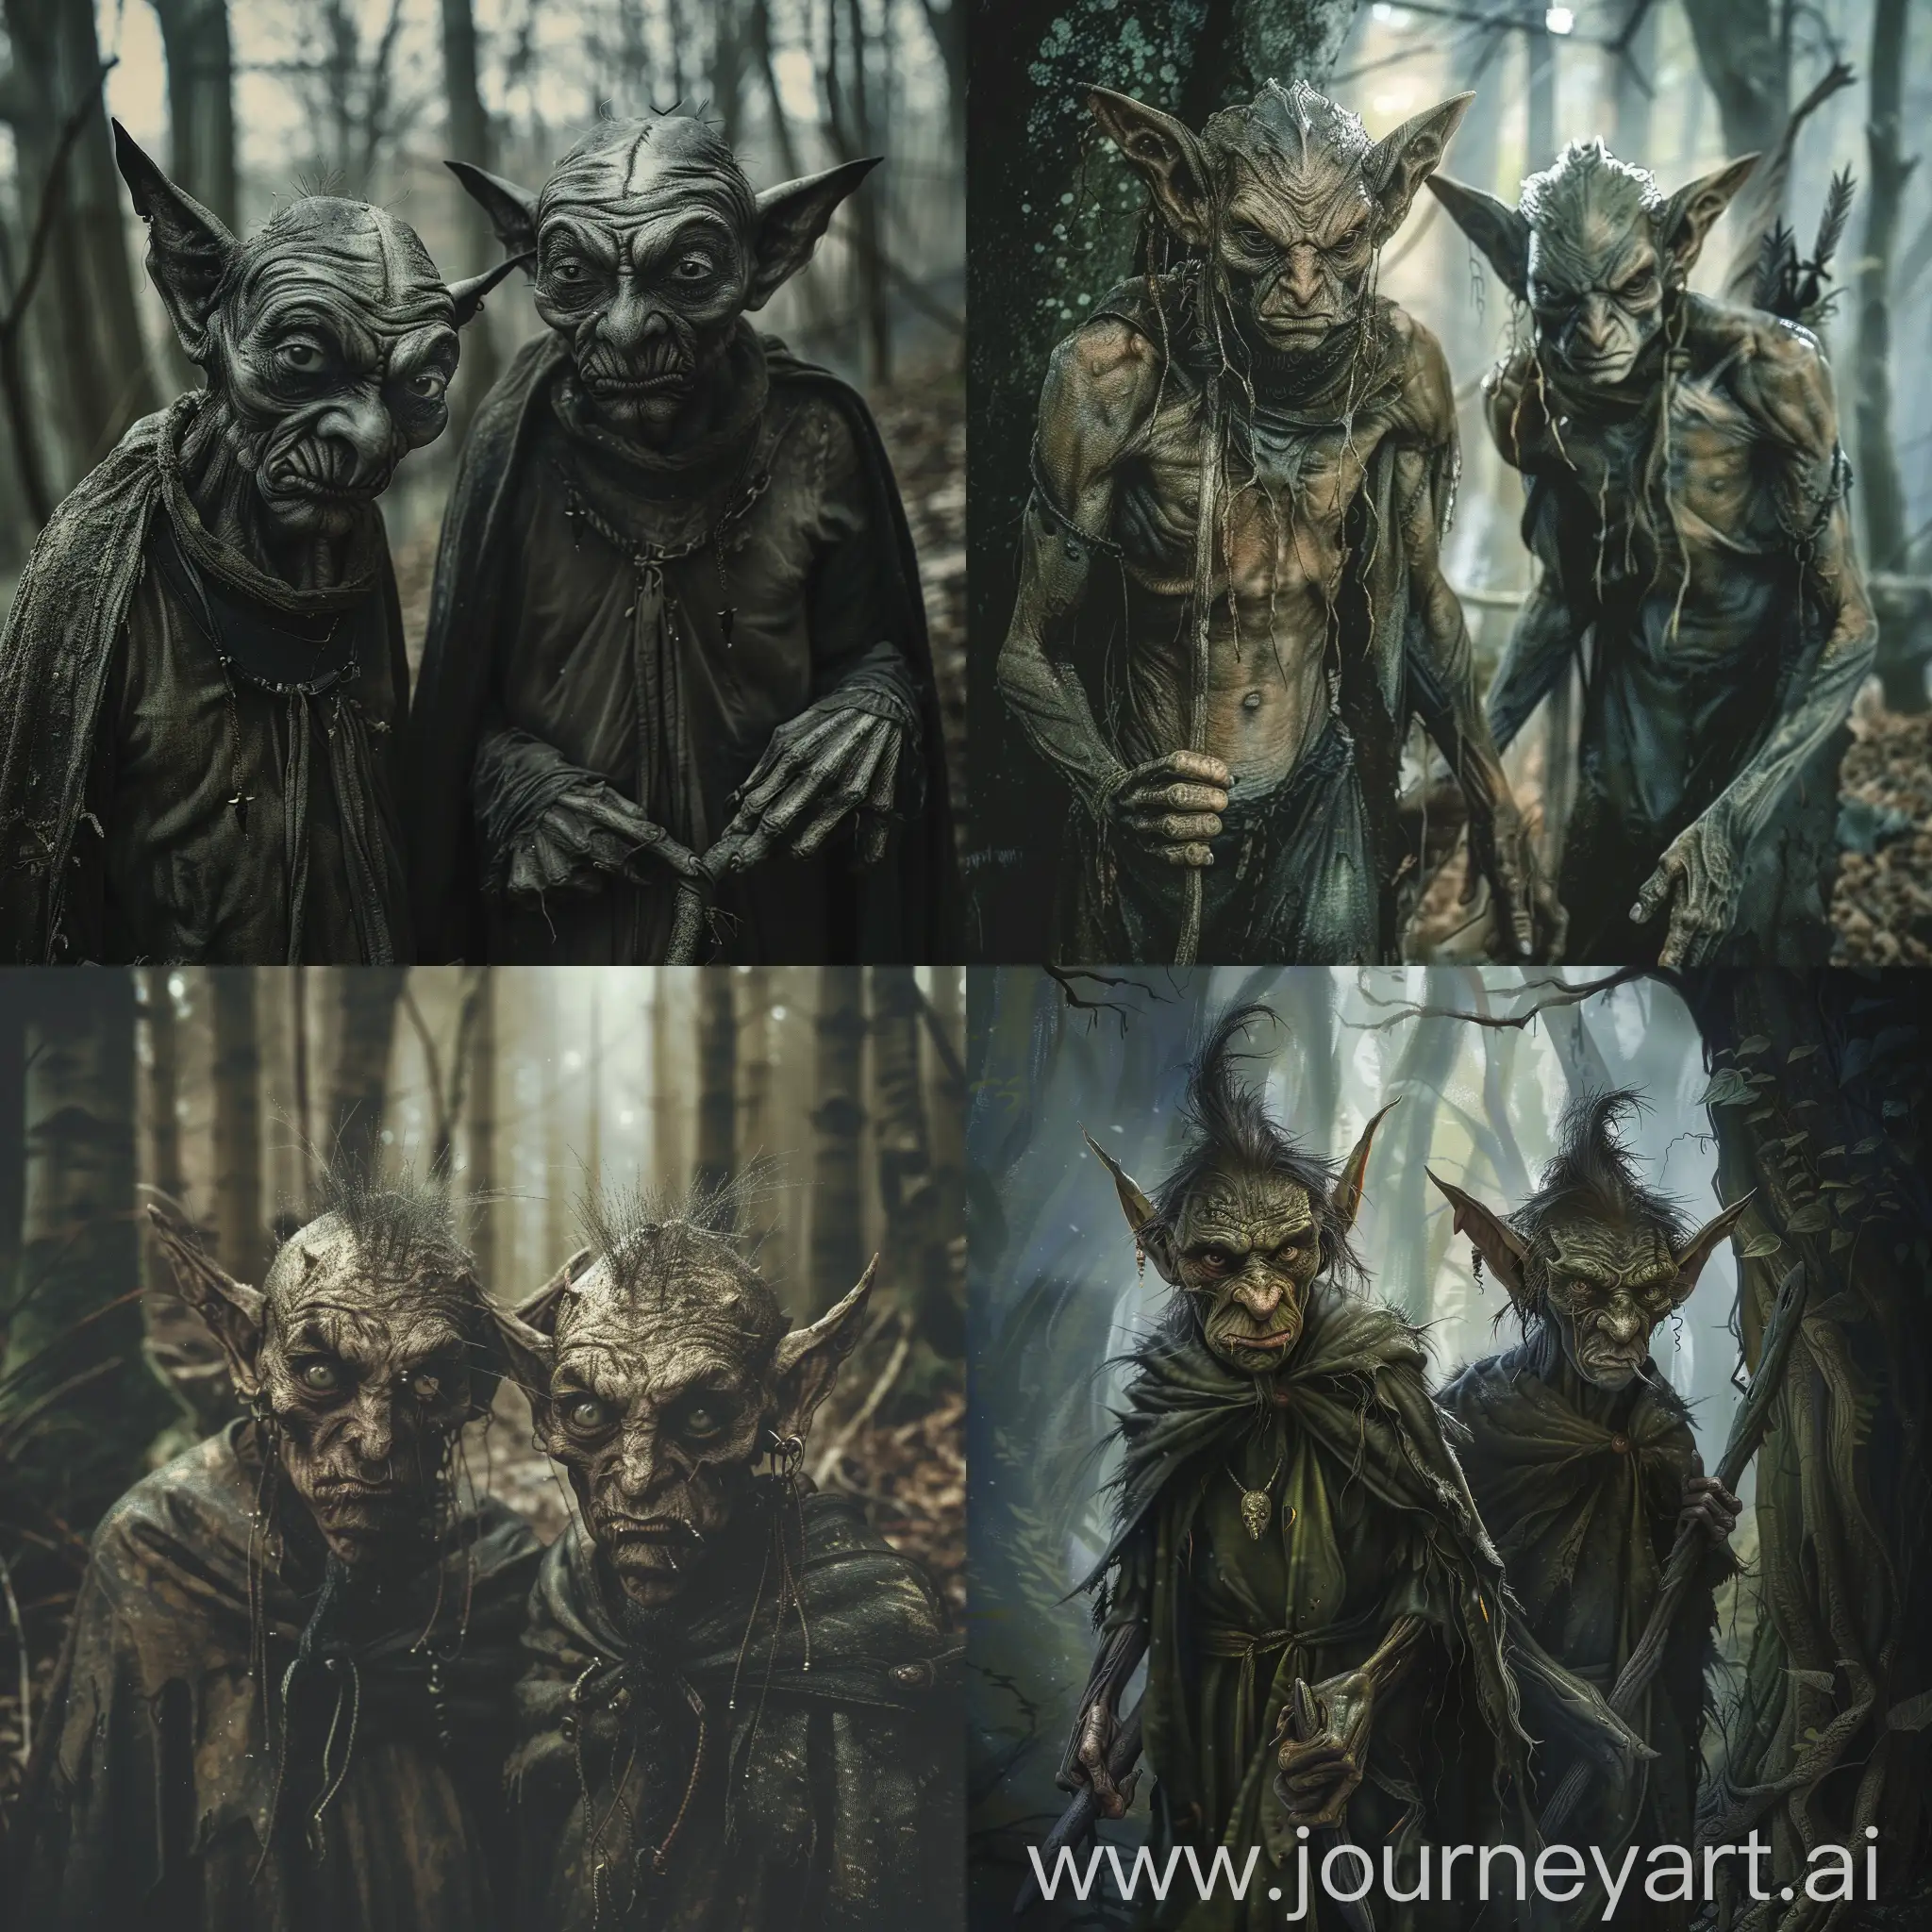 Eerie-Encounter-Dark-Fantasy-Scene-with-Two-Half-Elves-in-the-Woods